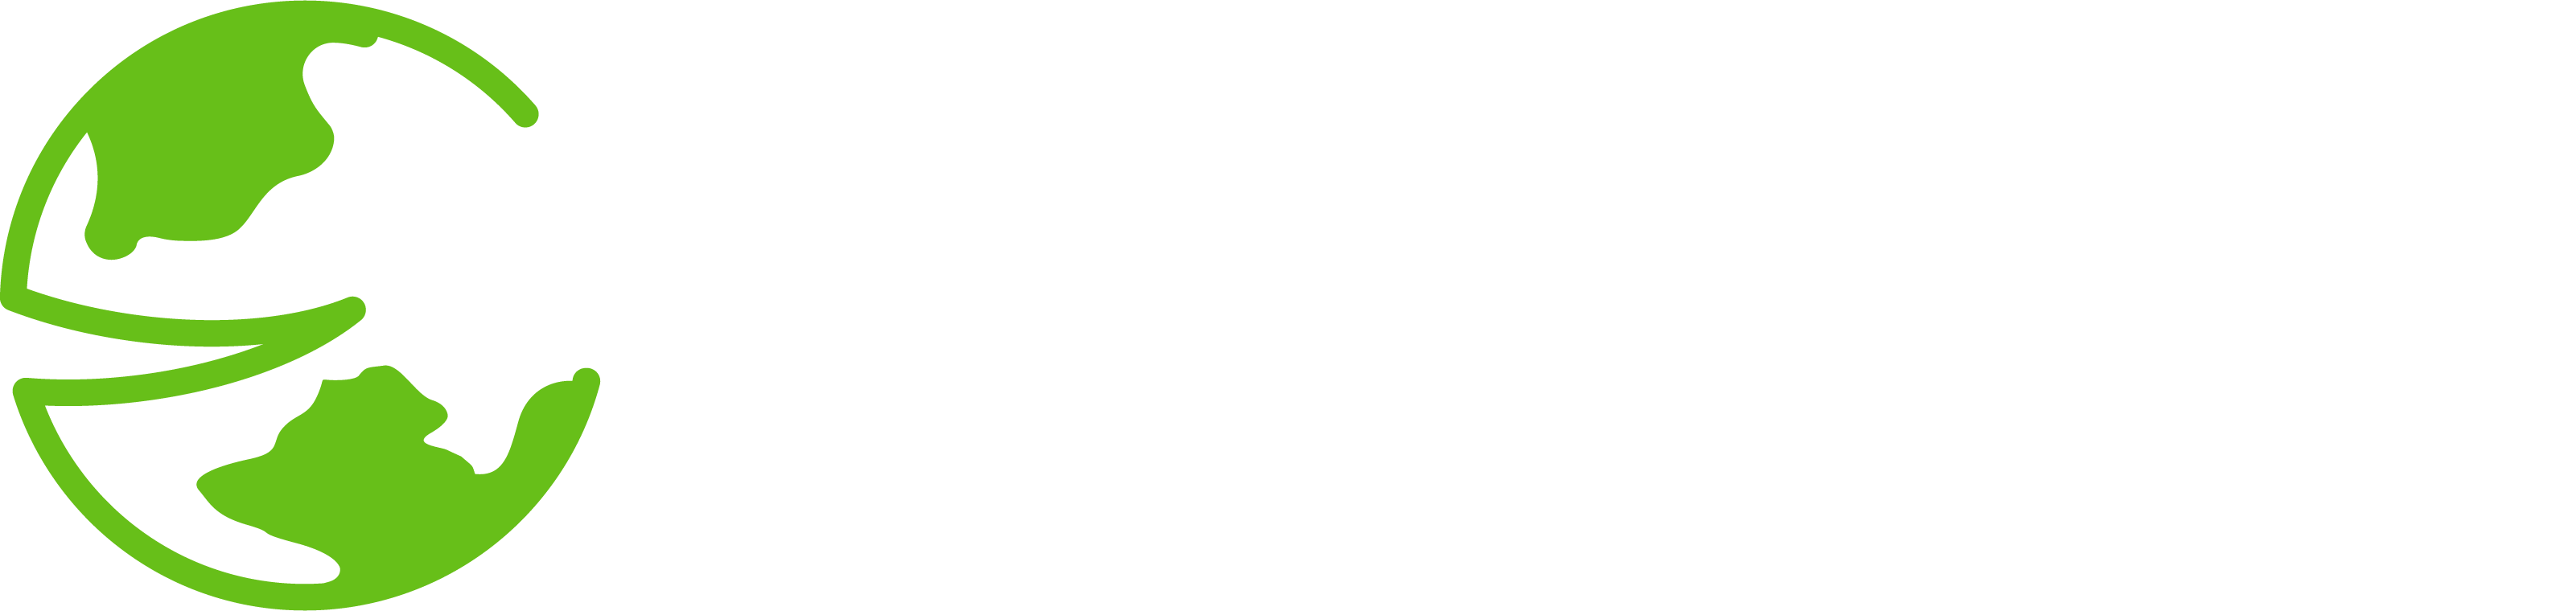 Jet-Set Offset logo